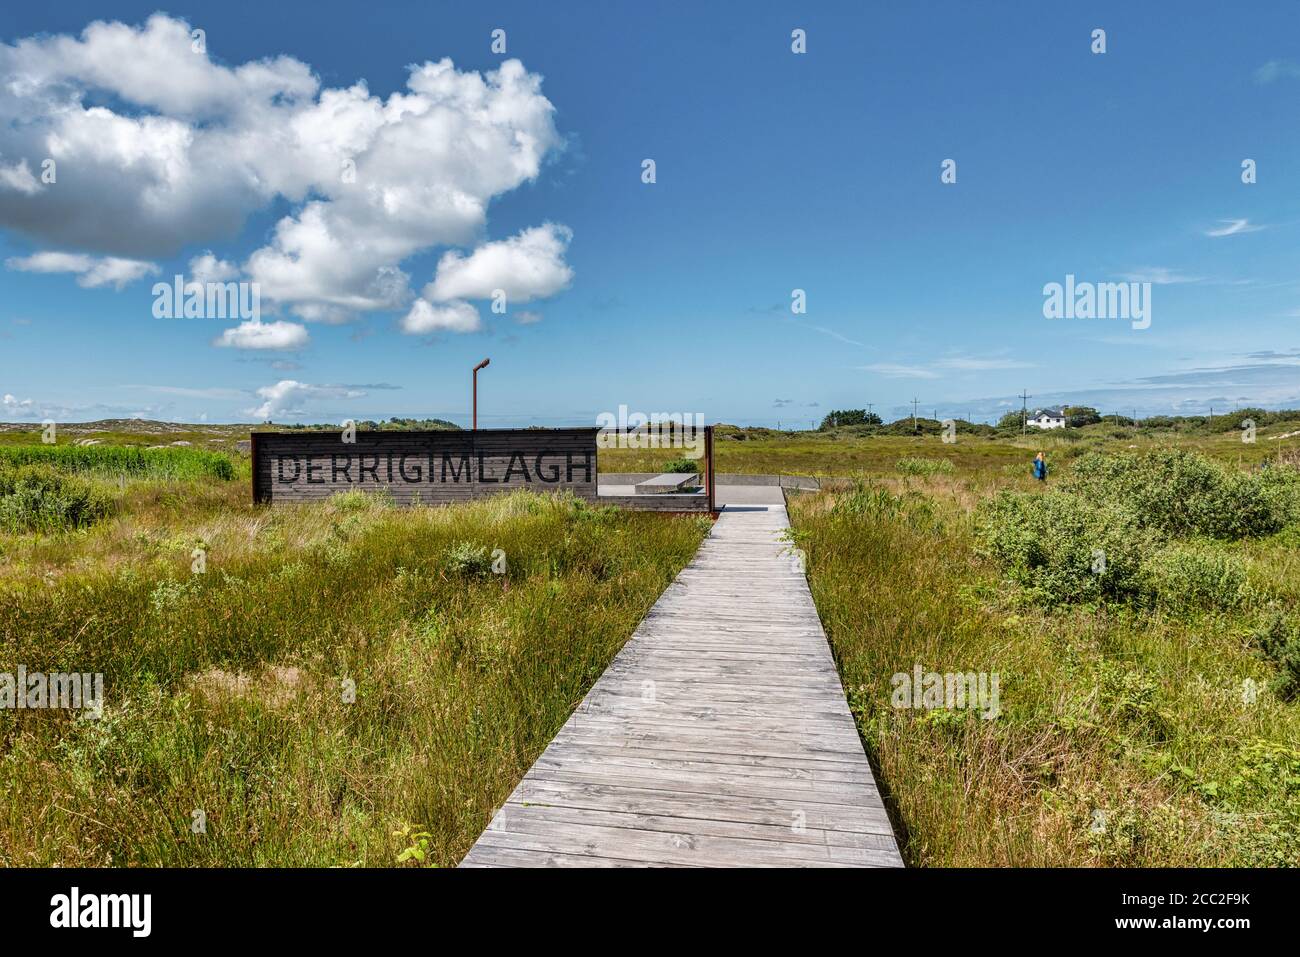 Derrigimlagh, Ireland- Jul 20, 2020: The Derrigimlagh Wild Atlantic Way viewing point Stock Photo